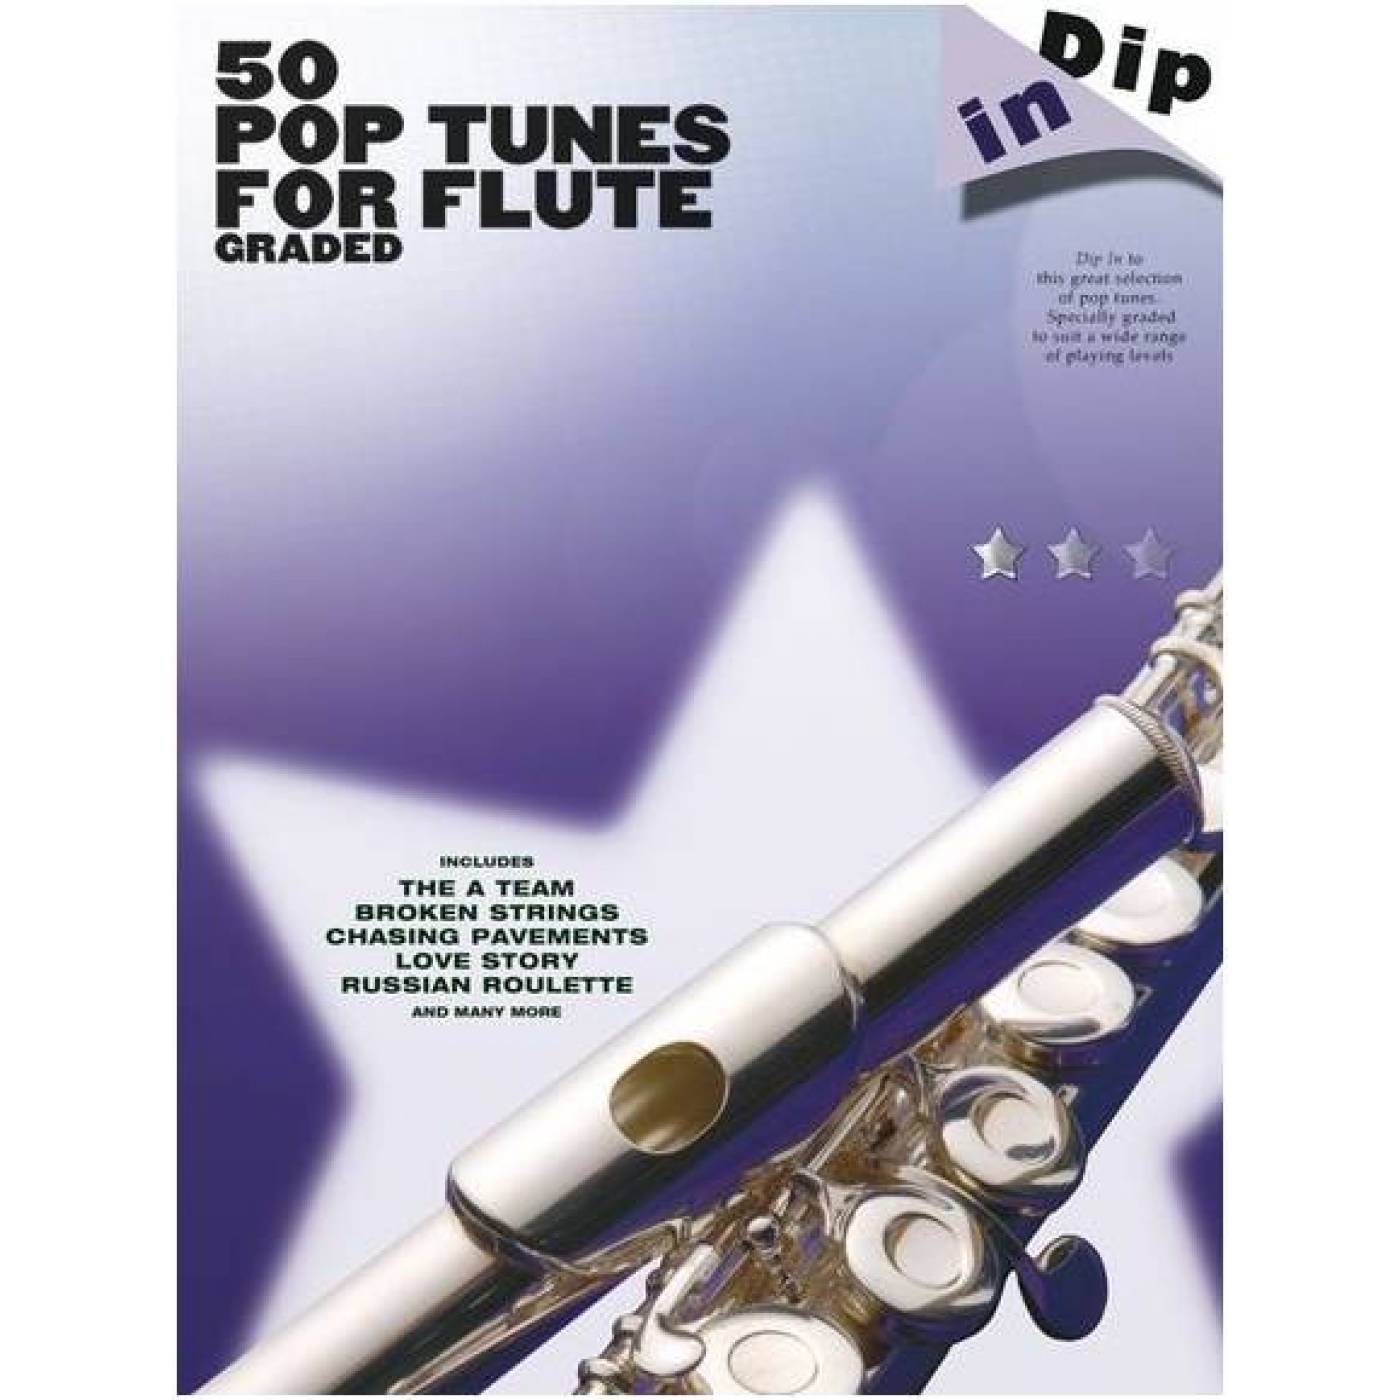 The Flute Tune. Книги о флейте. Музыкальная флейта сборник CD. Флейта книга птица.